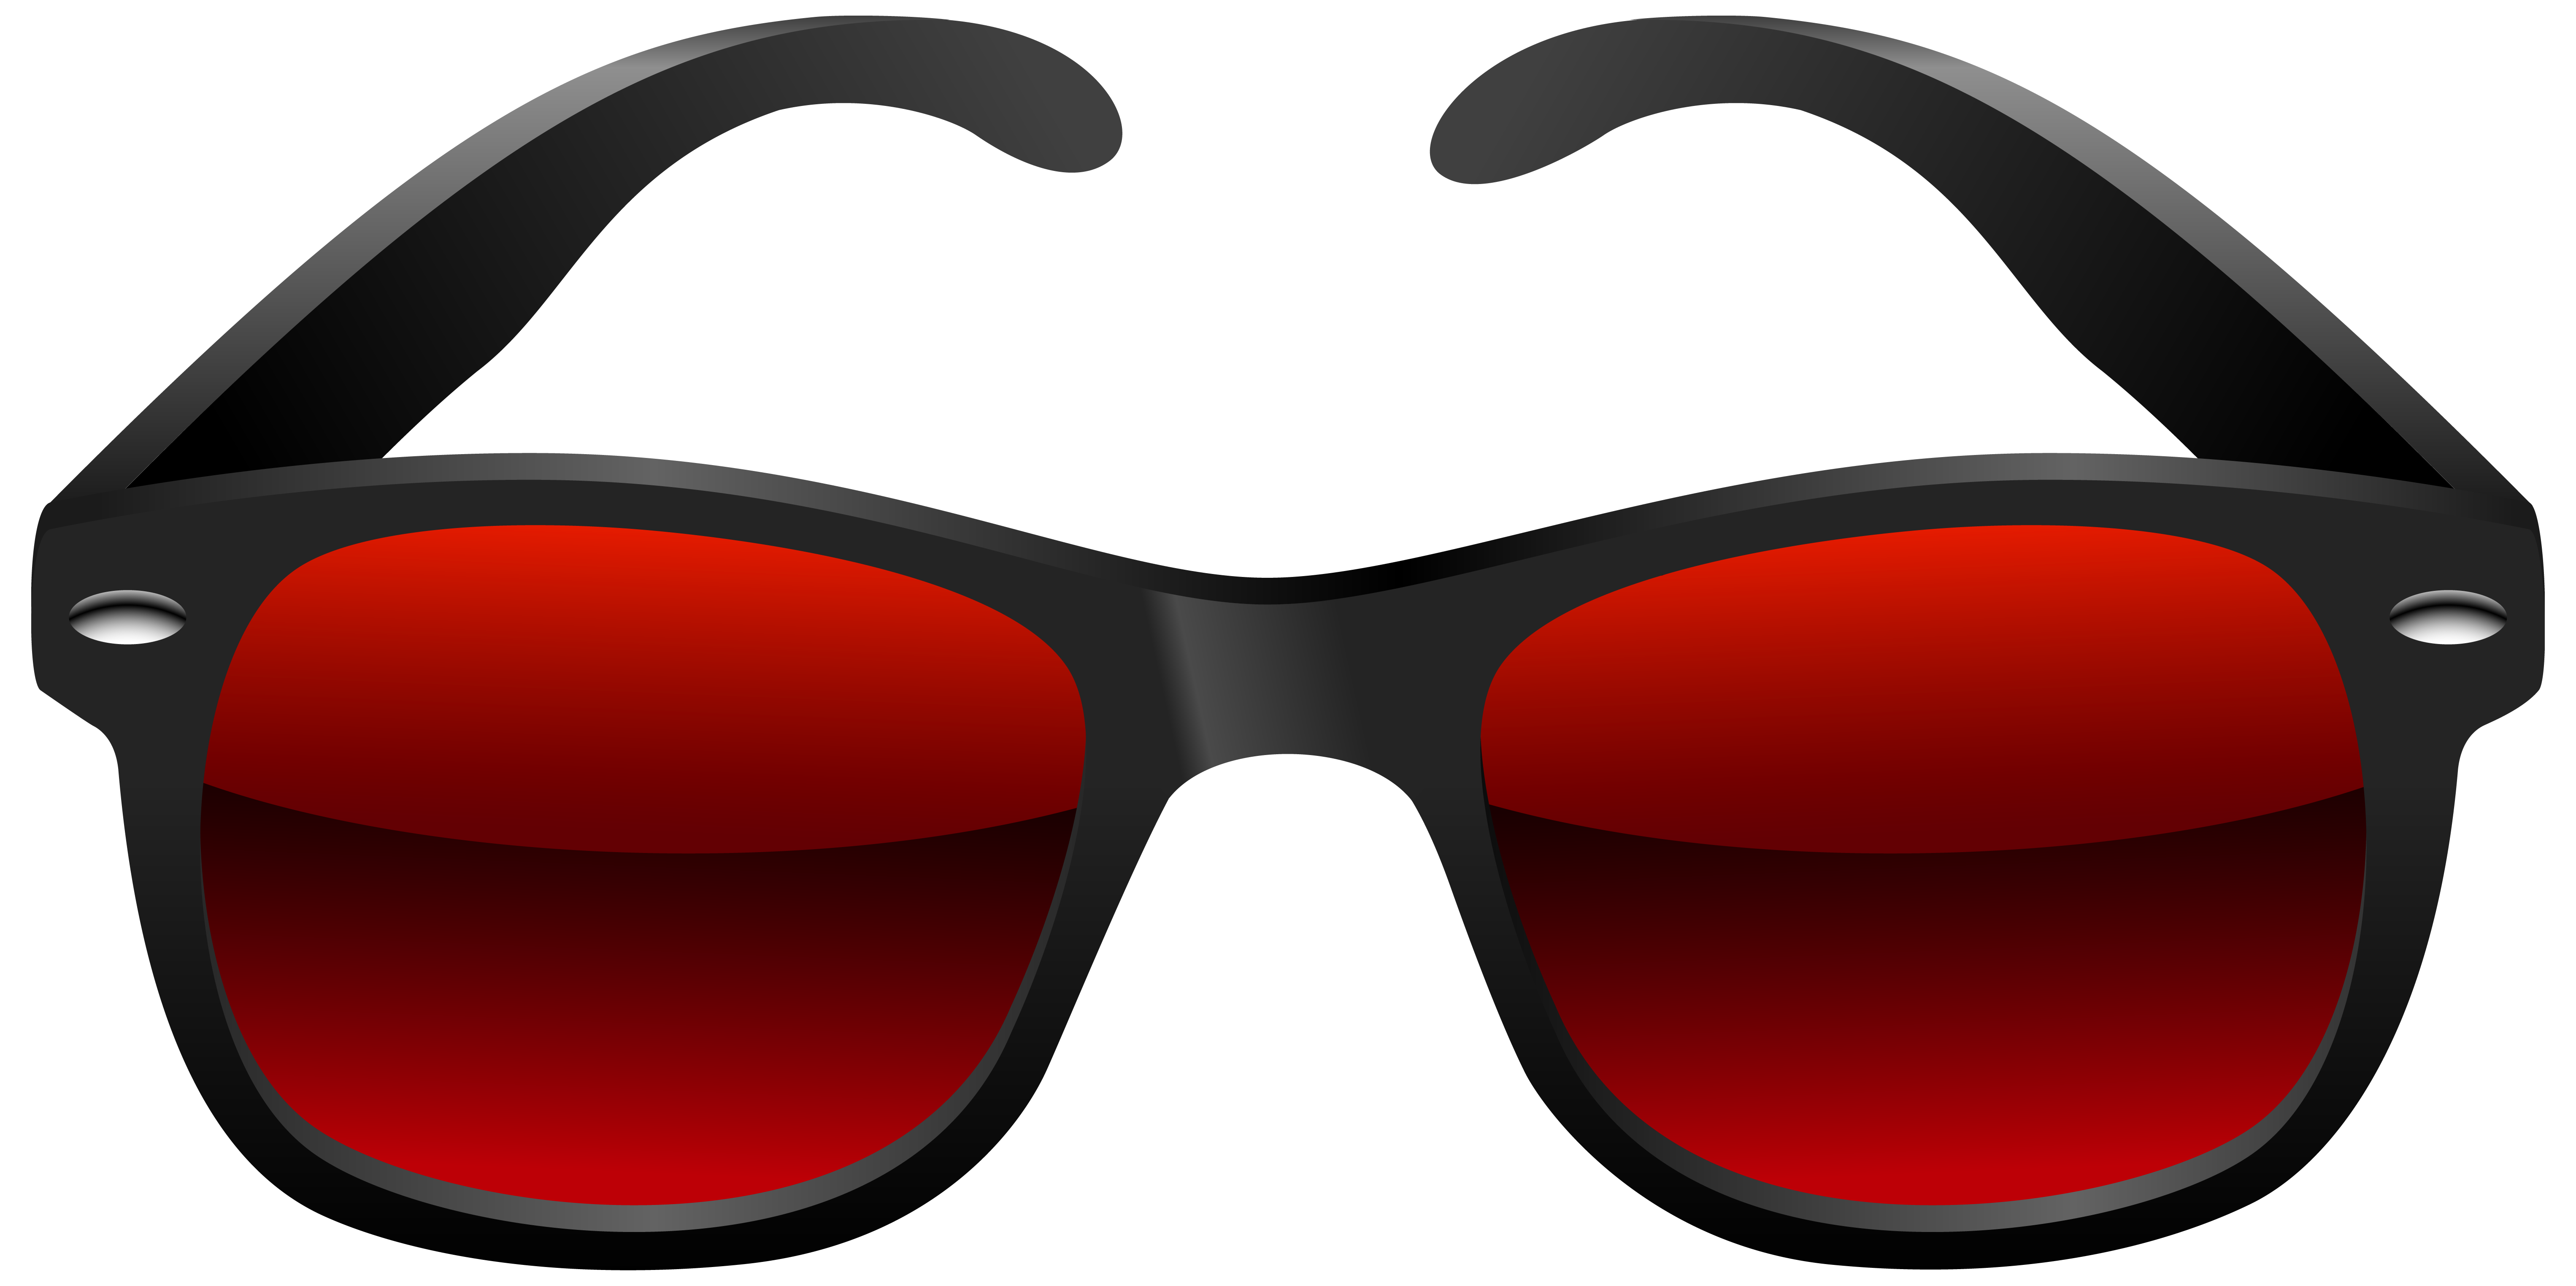 Sunglasses Glasses 3 Png Images Clipart